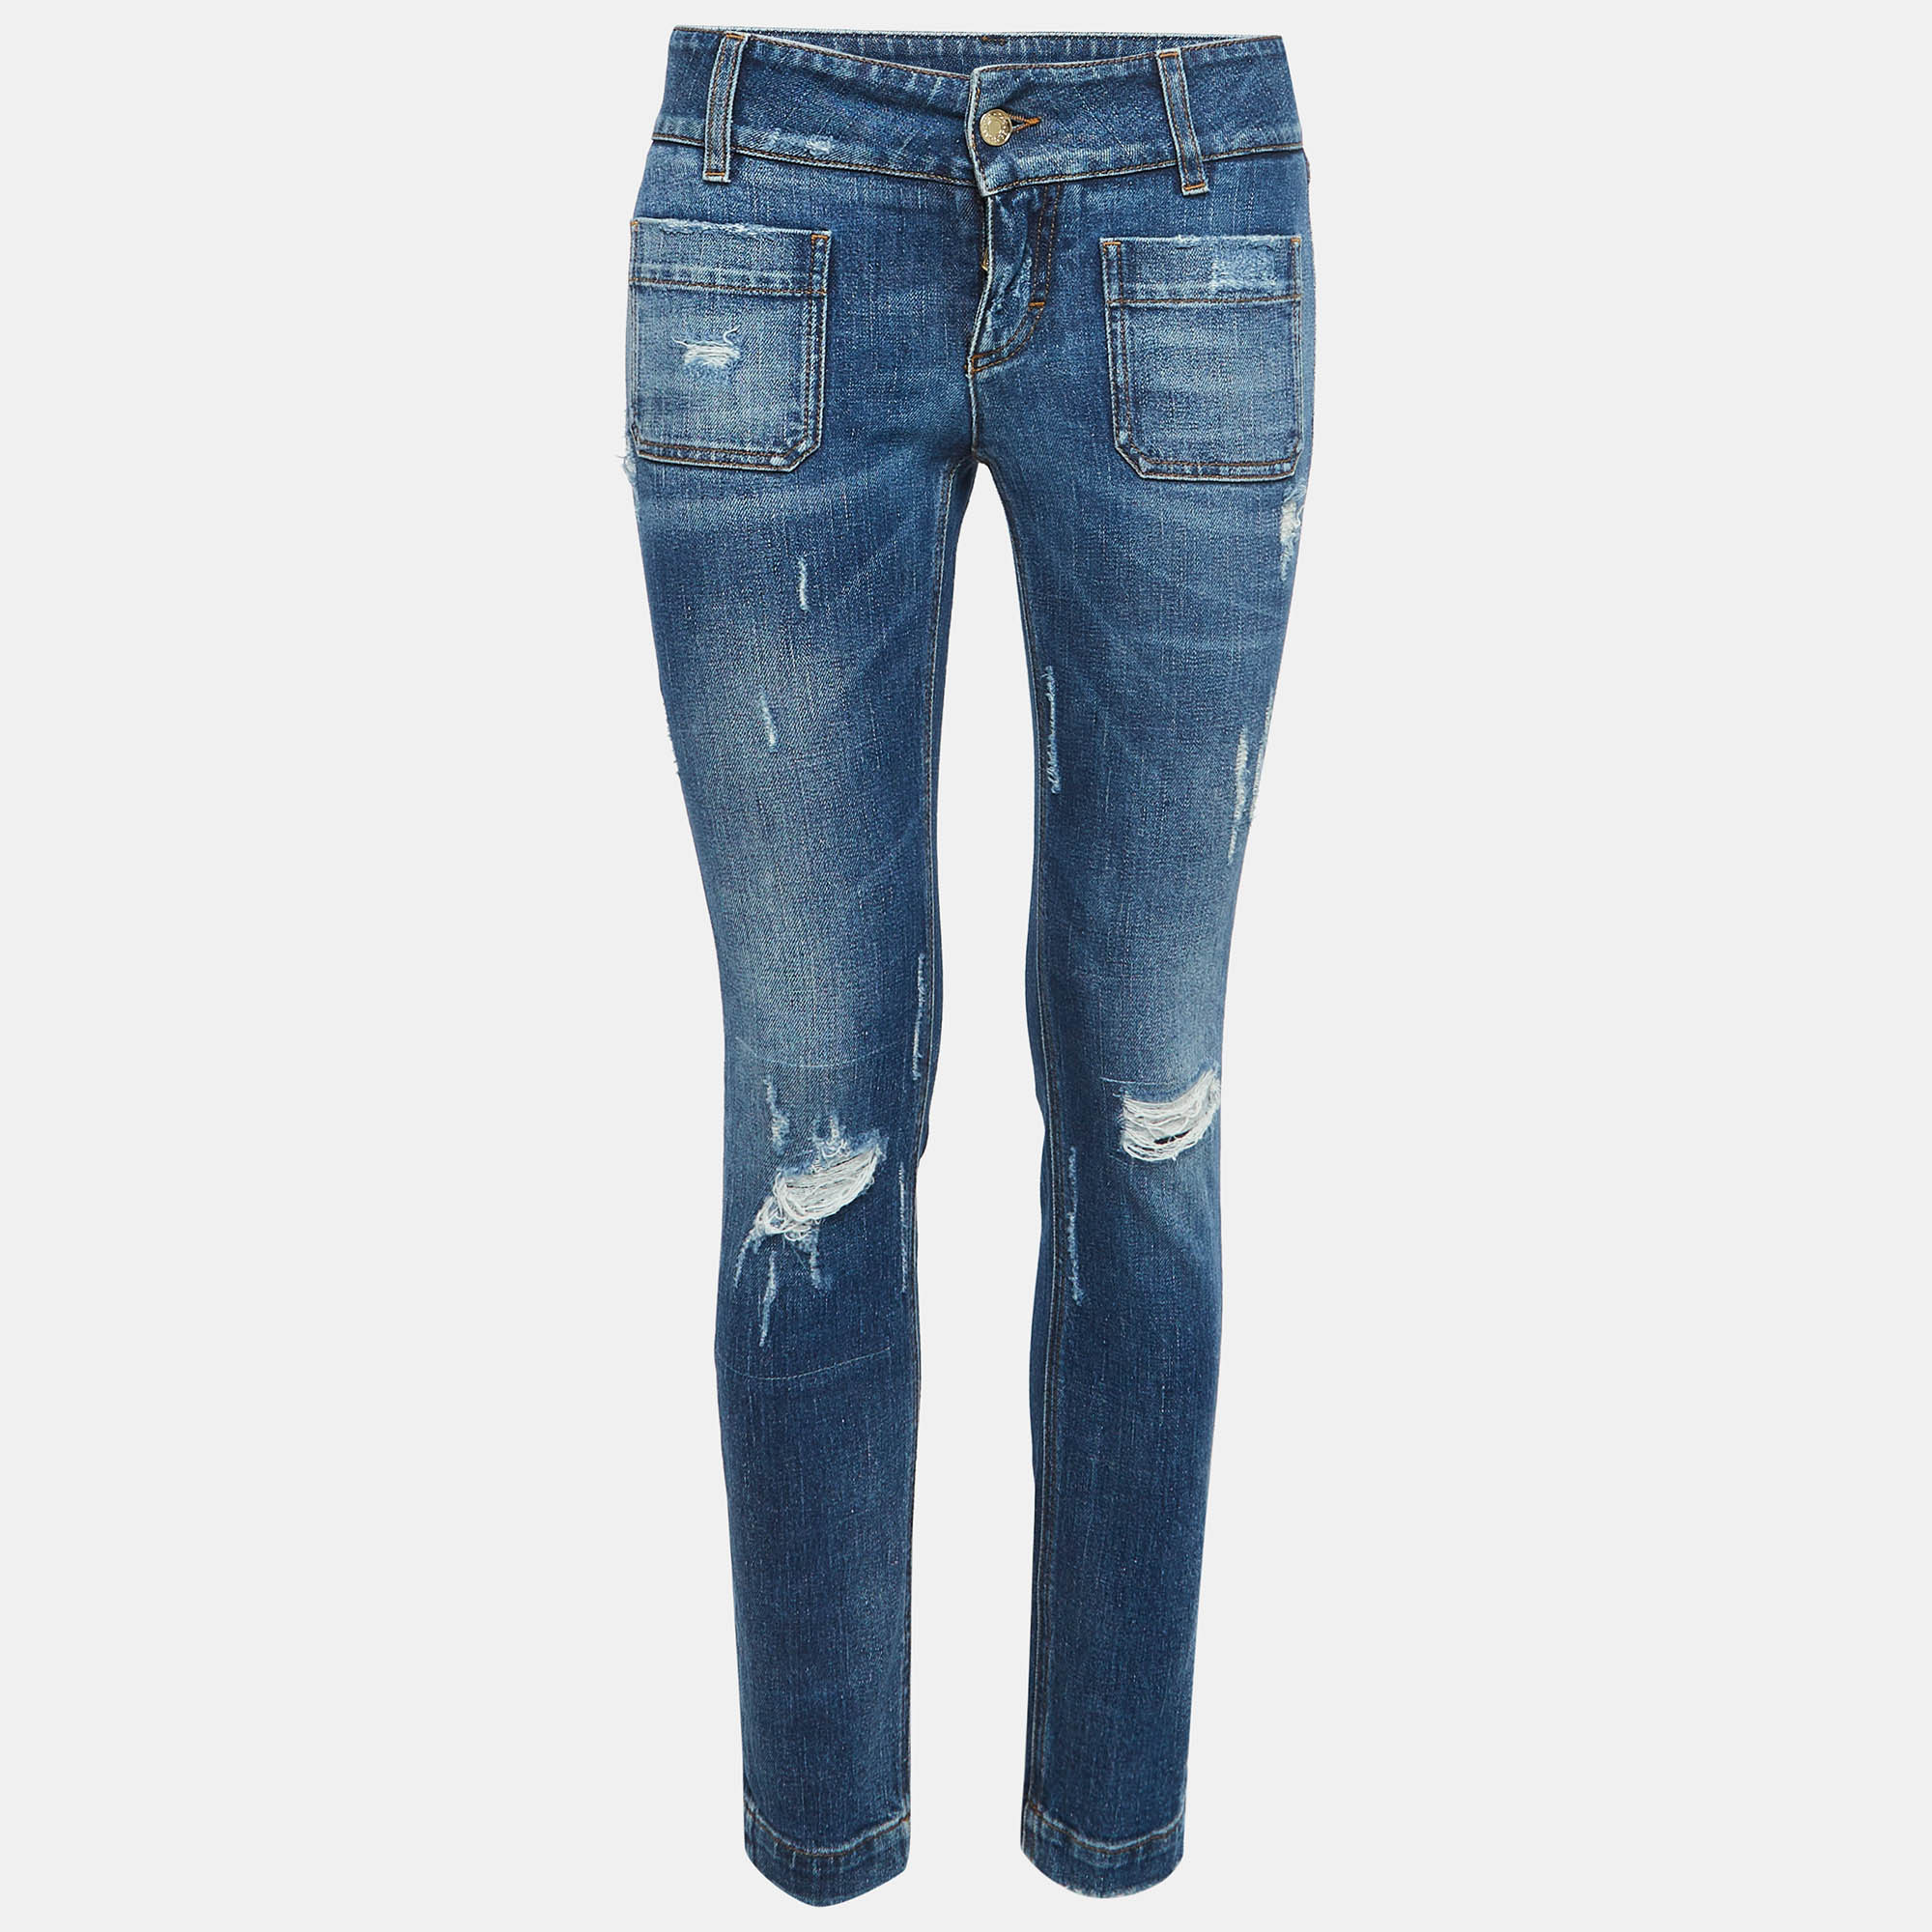 

Dolce & Gabbana Blue Washed Denim Distressed Jeans  Waist 28